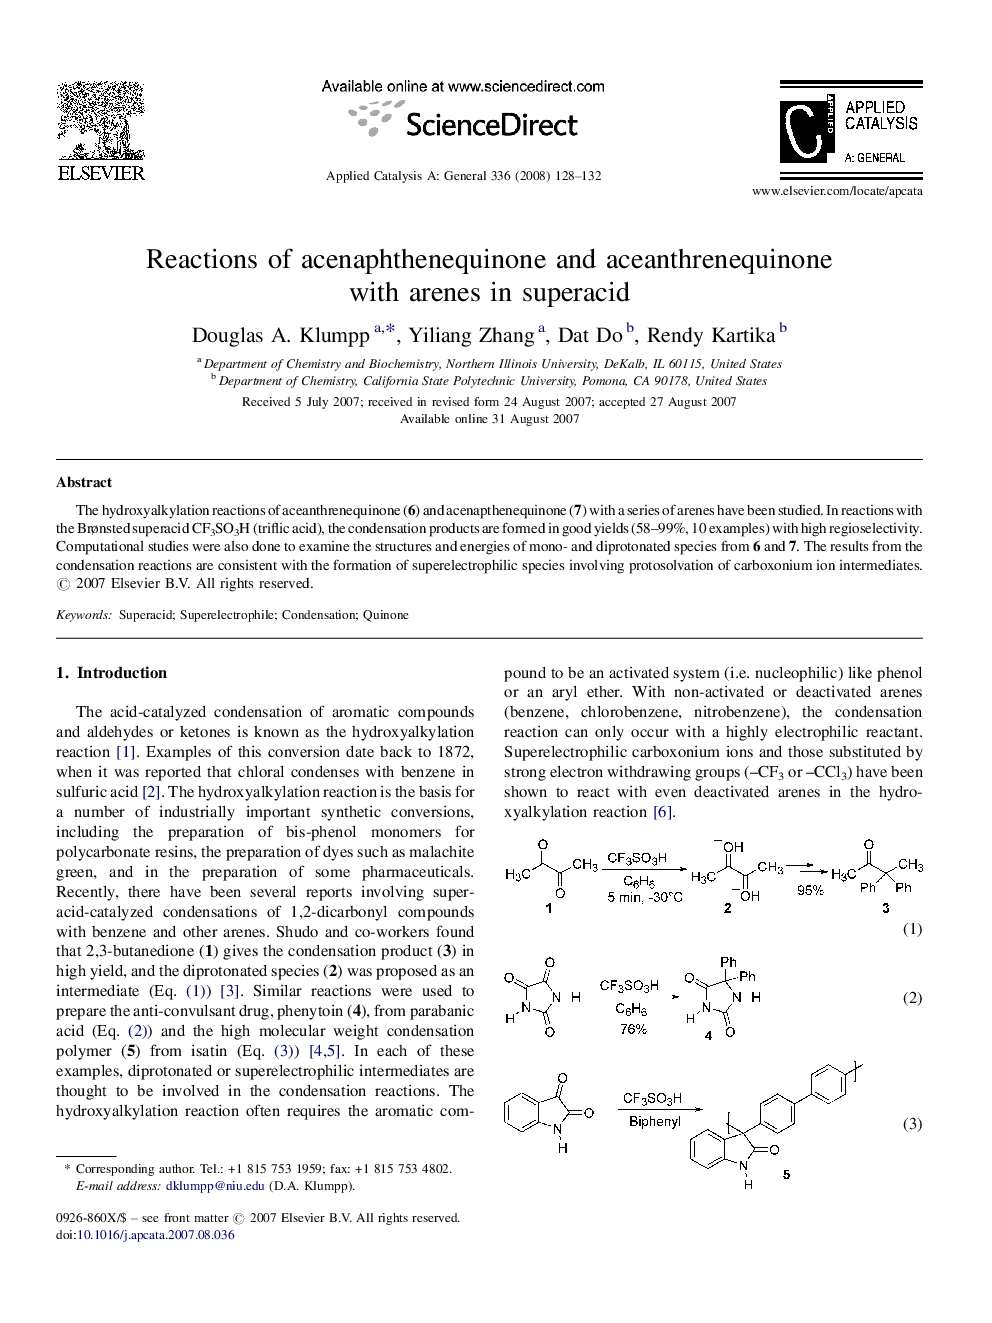 Reactions of acenaphthenequinone and aceanthrenequinone with arenes in superacid